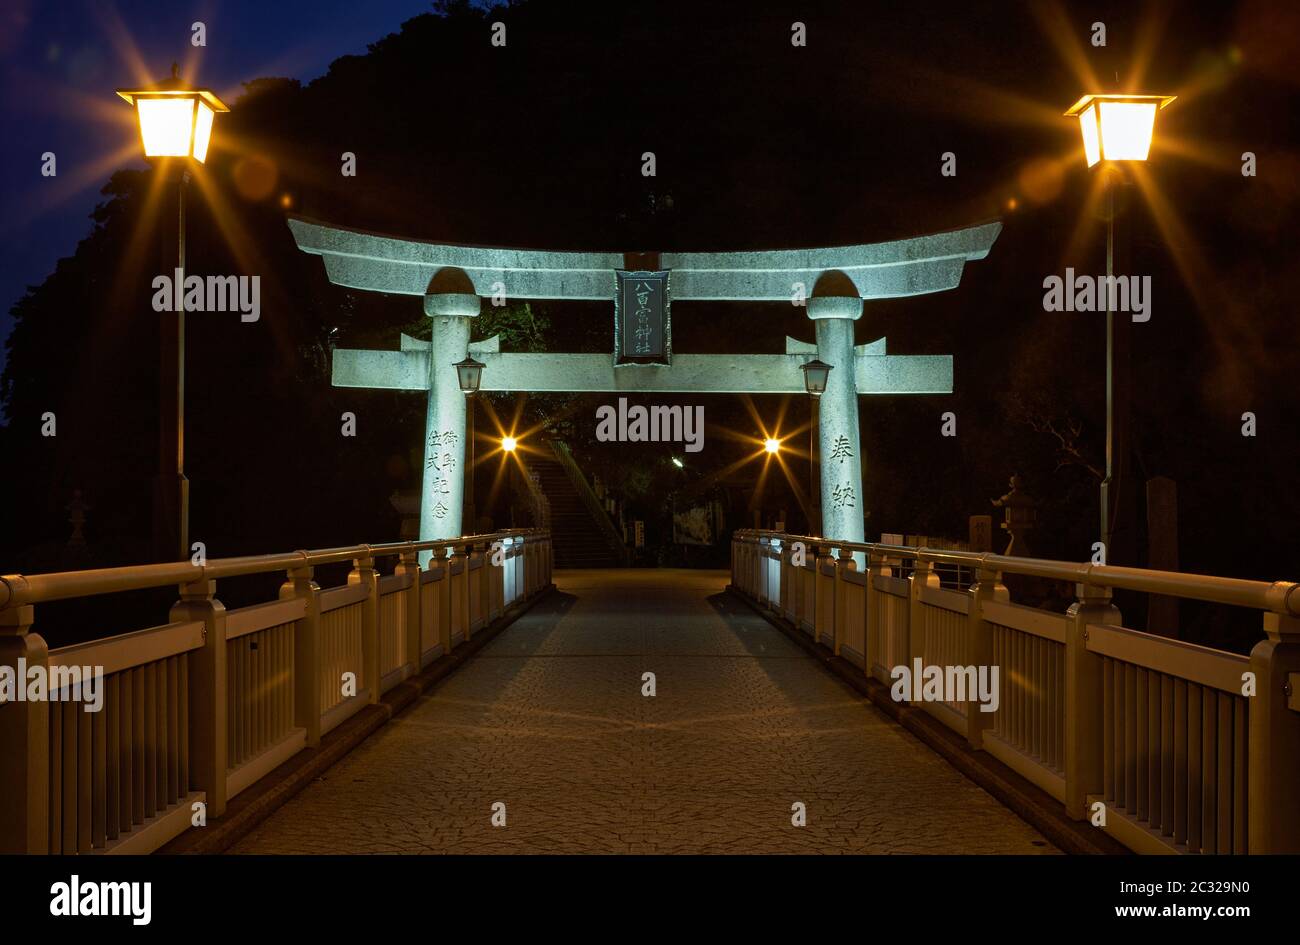 Night view on bridge from Take Island to Gamagori, Japan Stock Photo